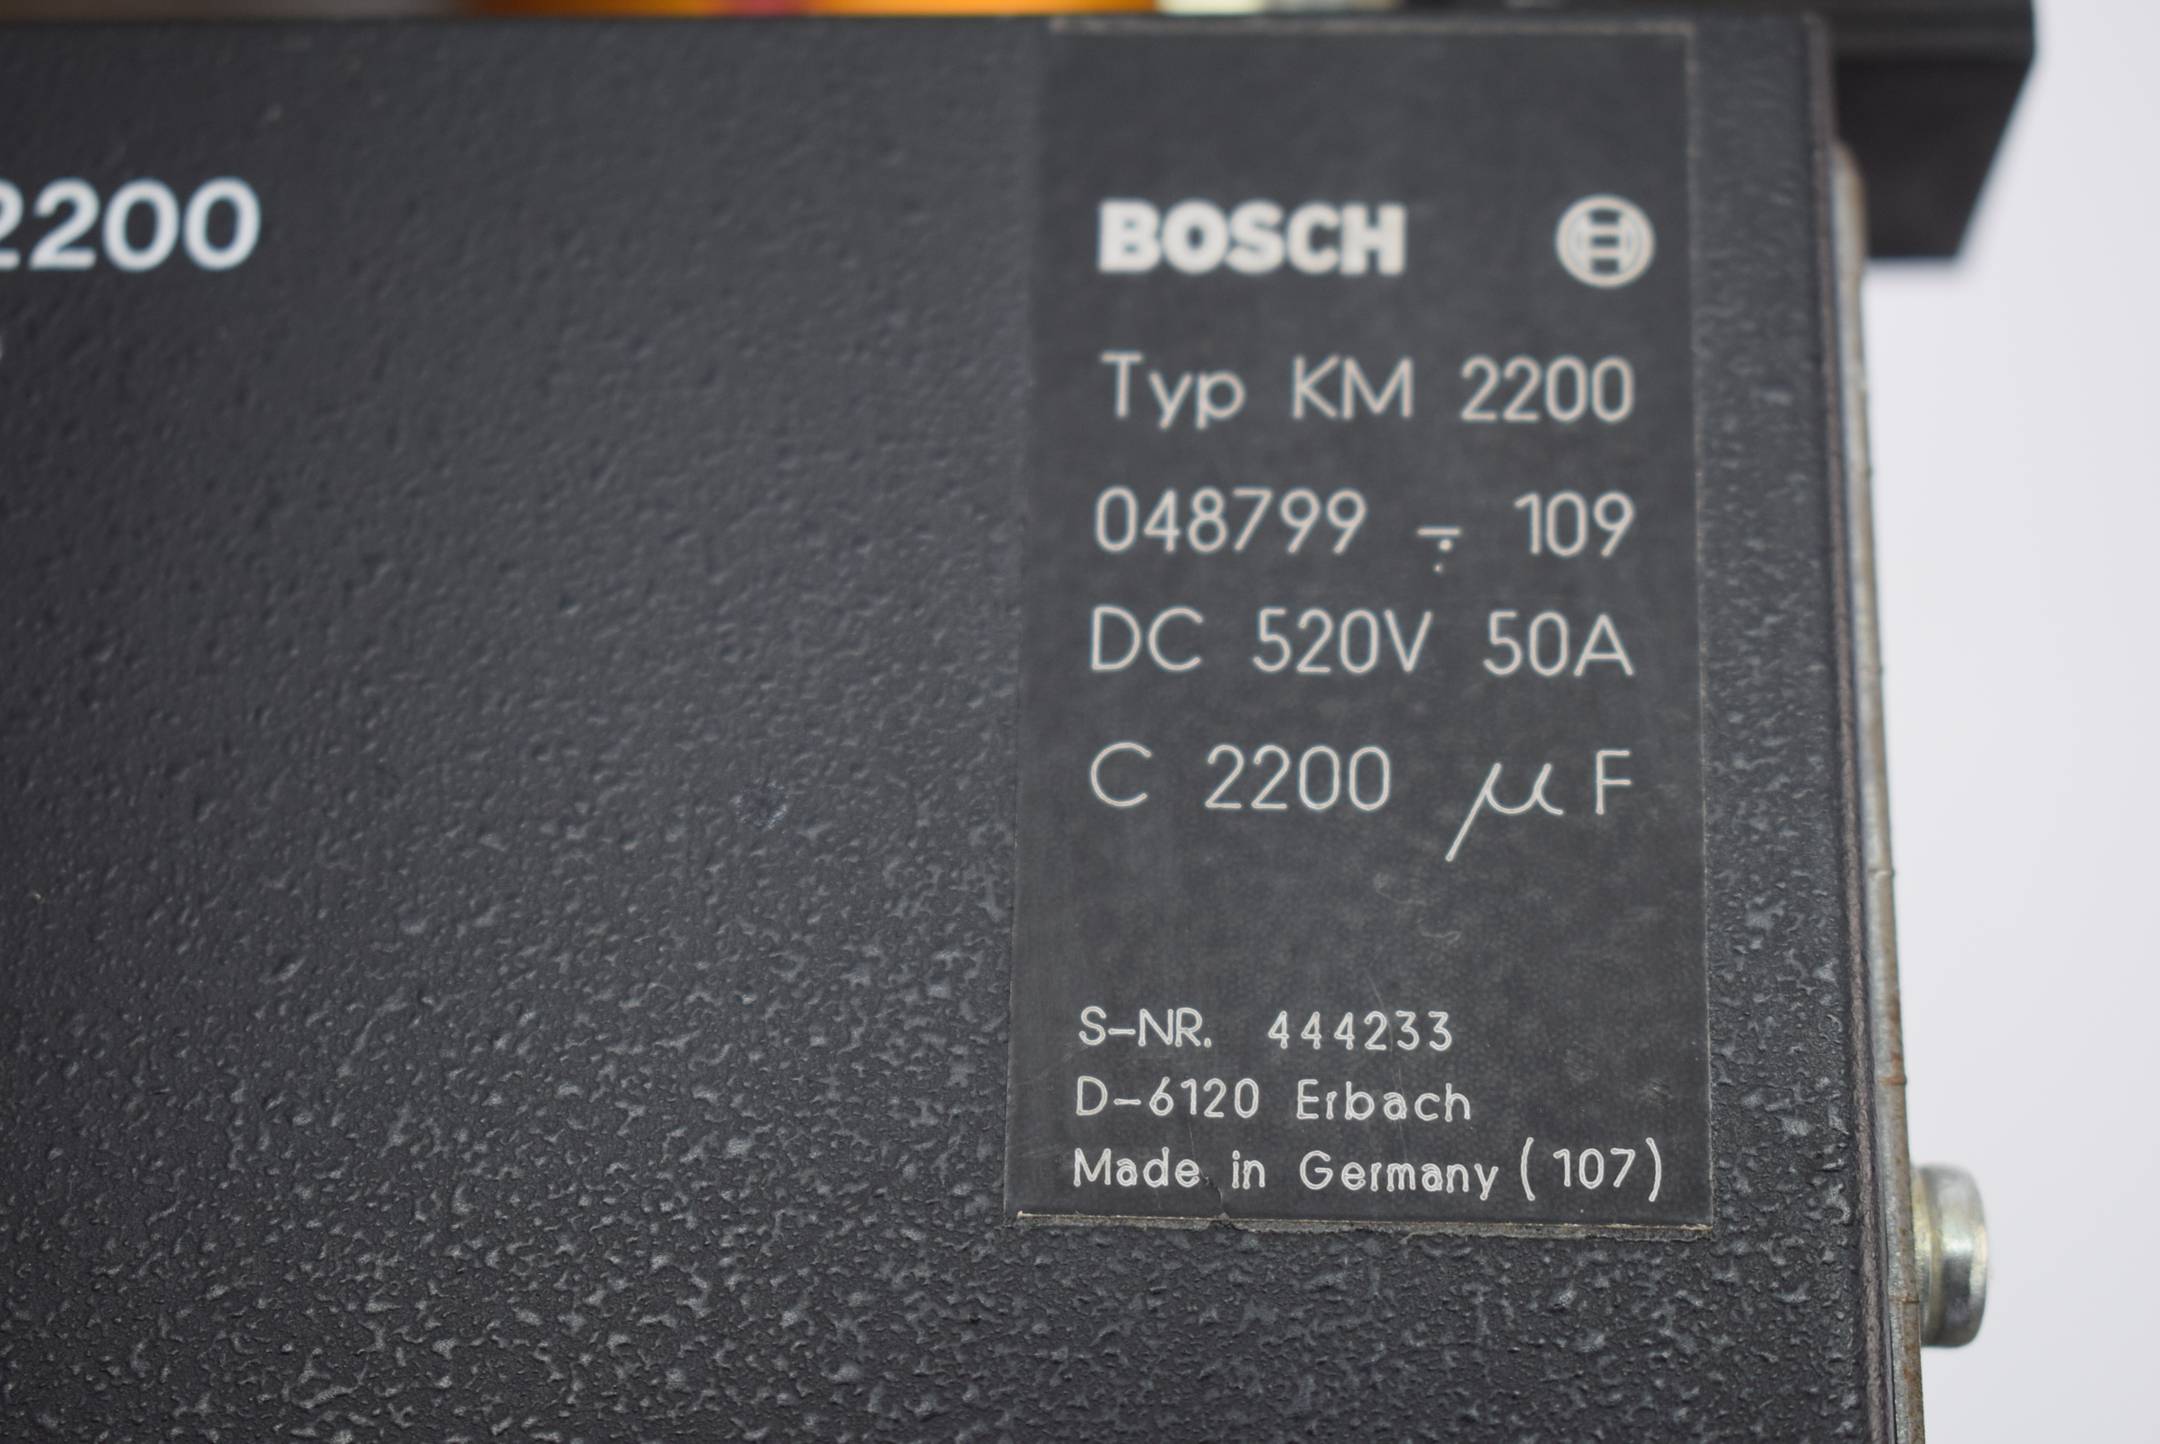 Bosch KM2200 Kondensatormodul KM 2200 048799-109 DC 520V 50A C 2200